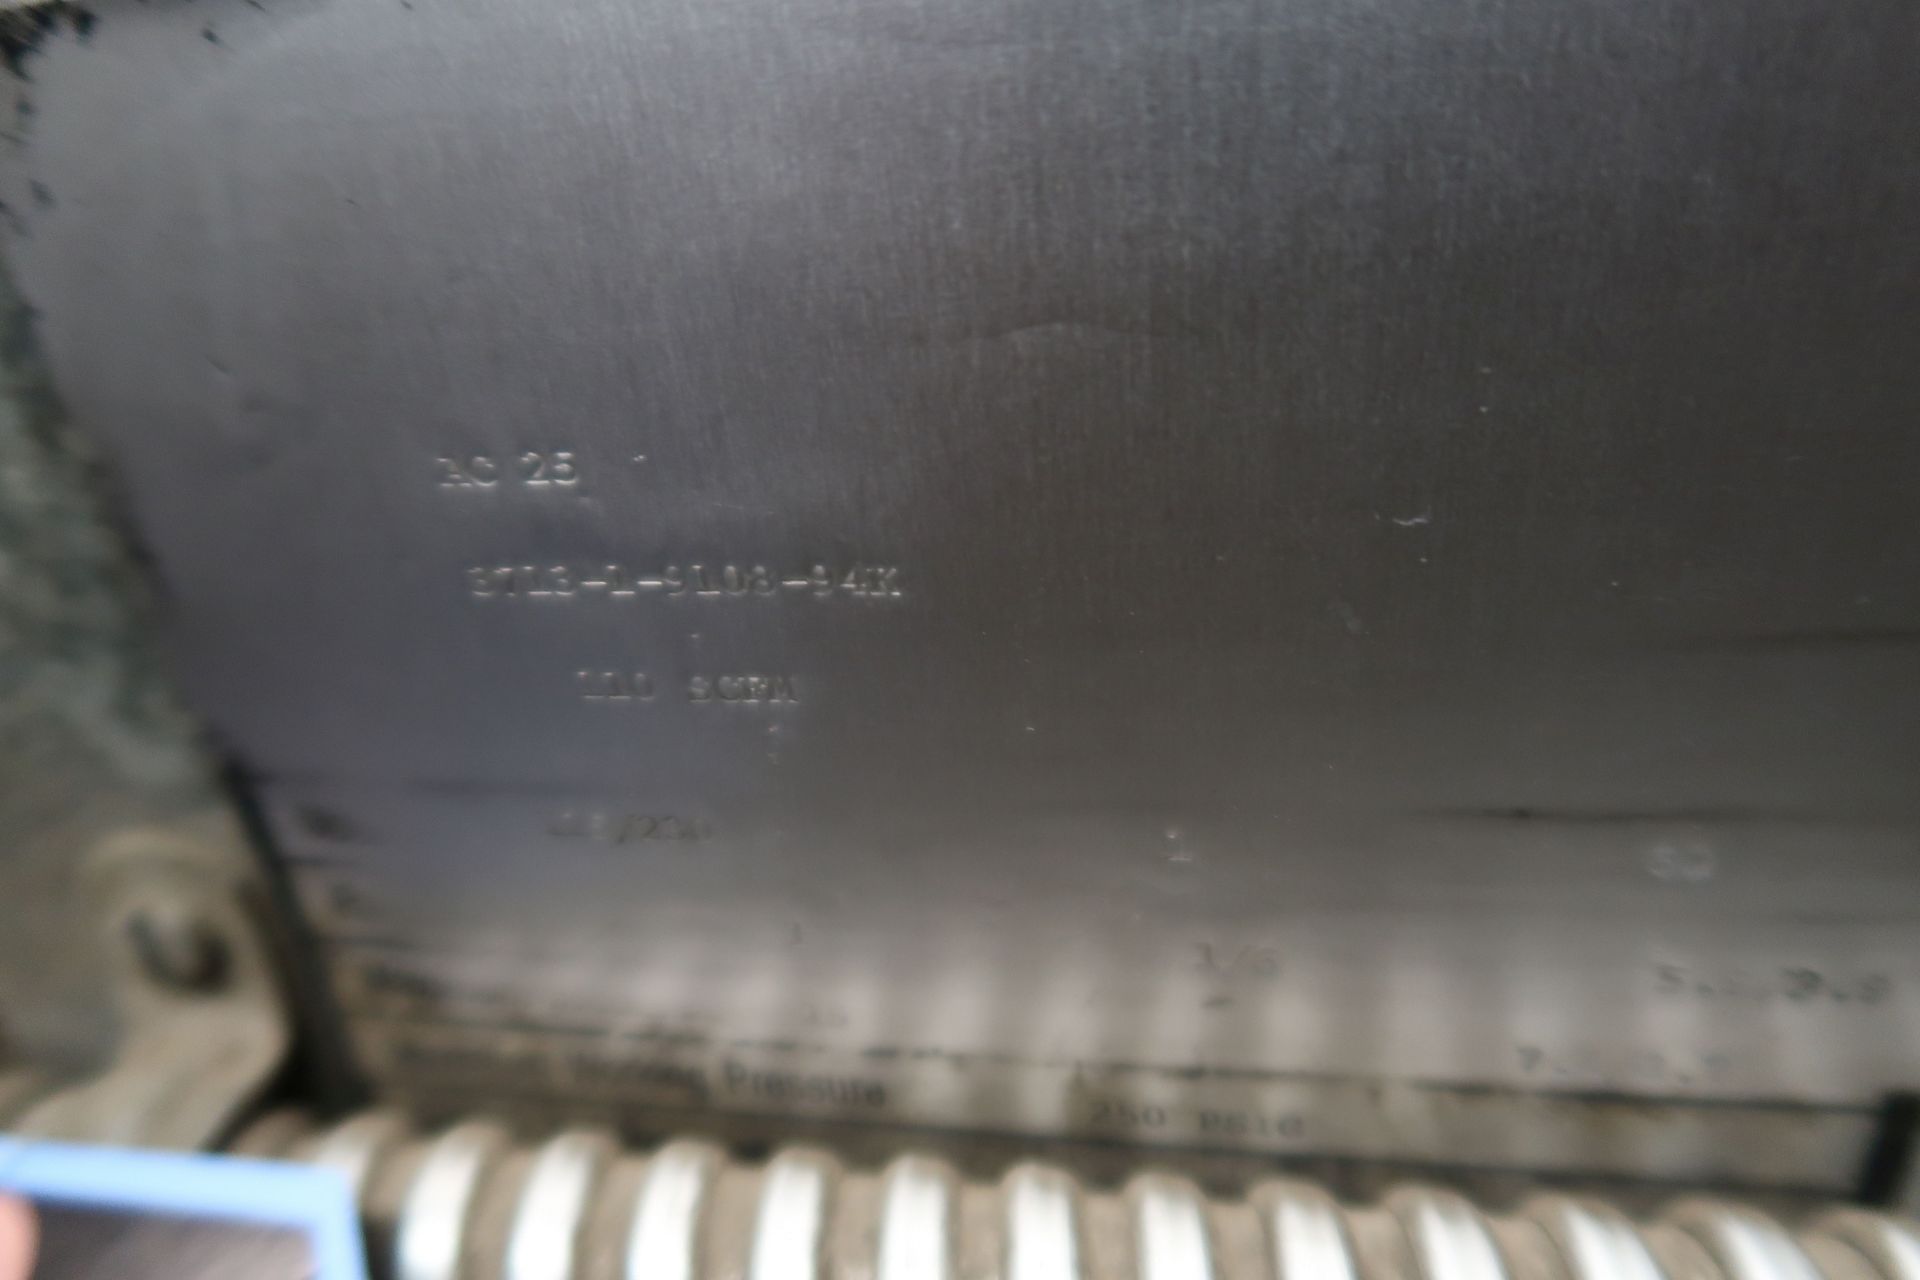 KAESER MODEL AC-25 AIR COOLED AFTER COOLER; S/N 3713-1-9108-94K - Image 2 of 2